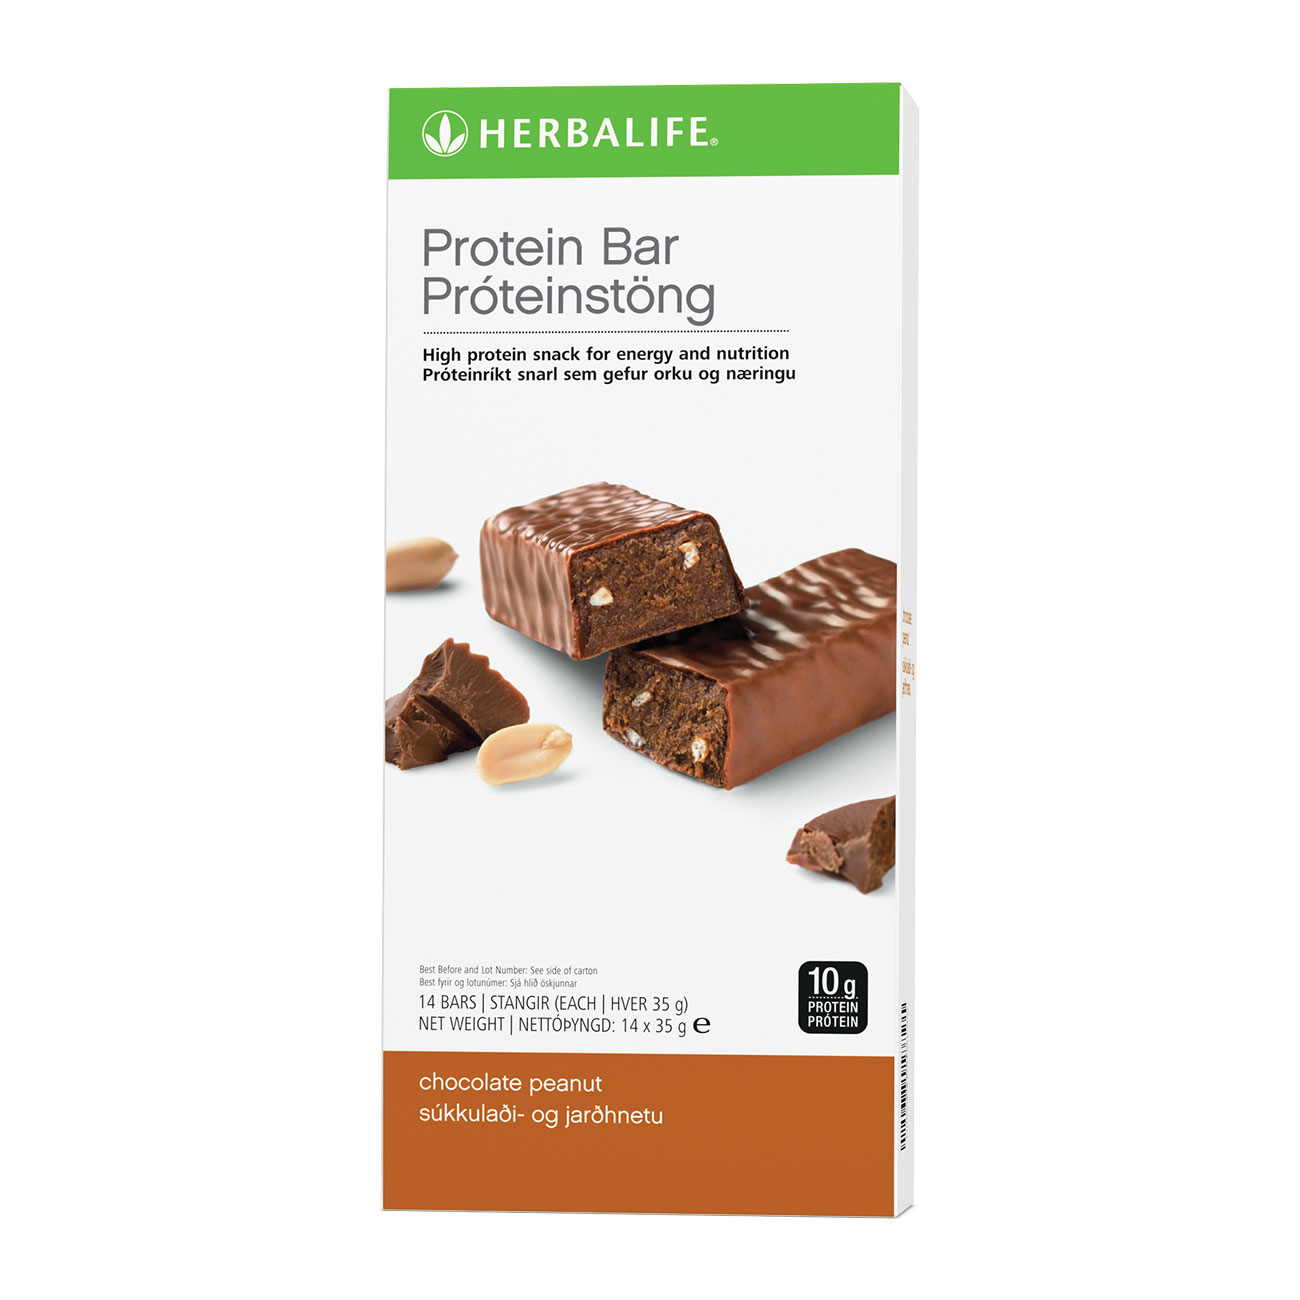 Protein Bars Chocolate Peanut product shot